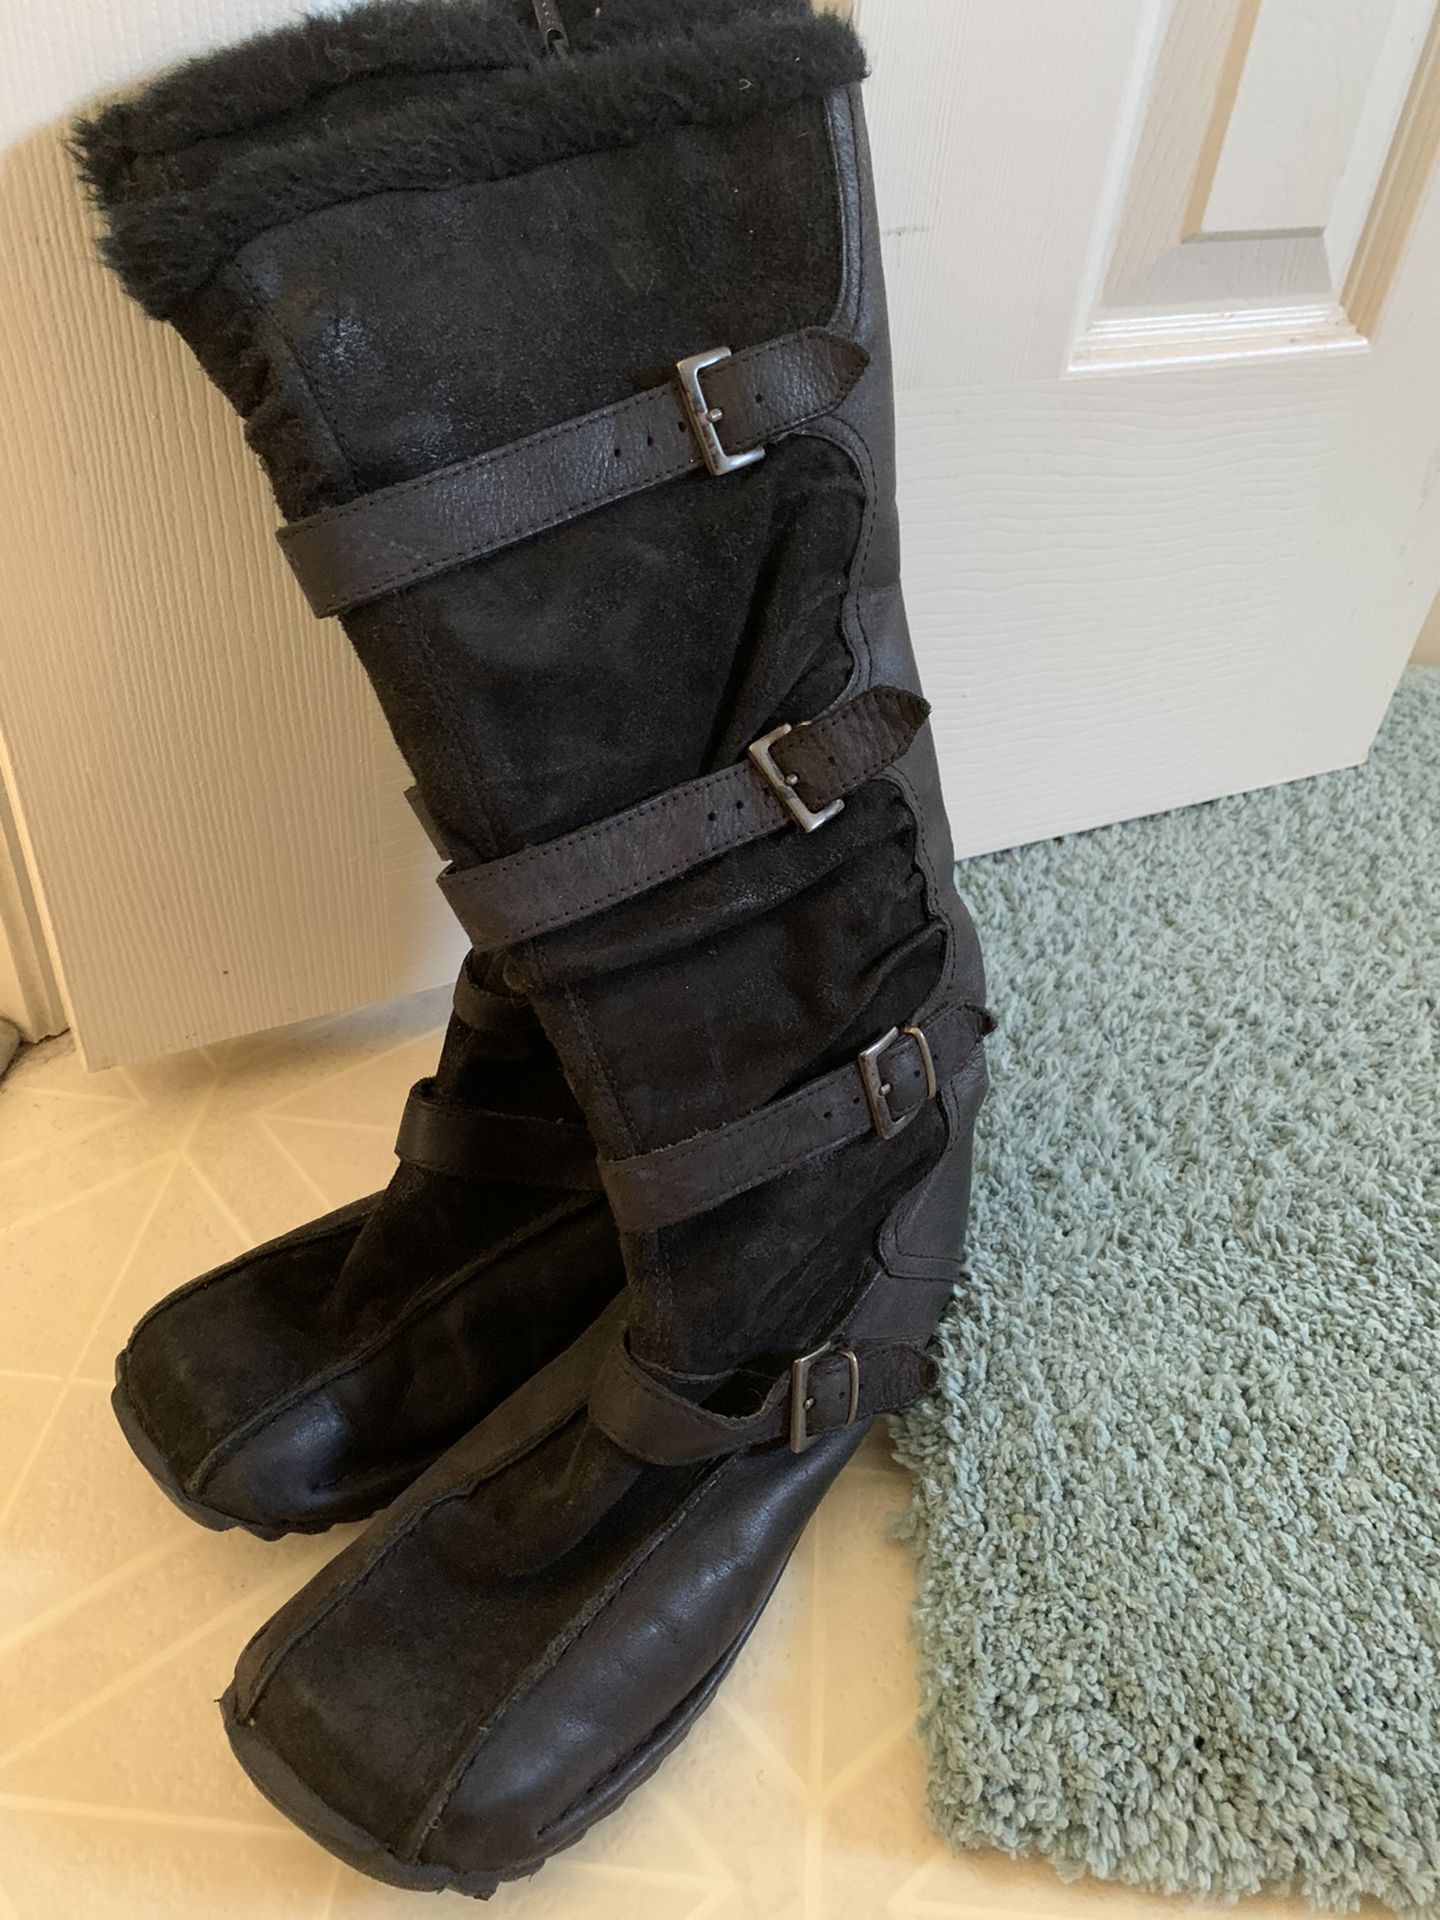 Aldo black boots 7.5 size